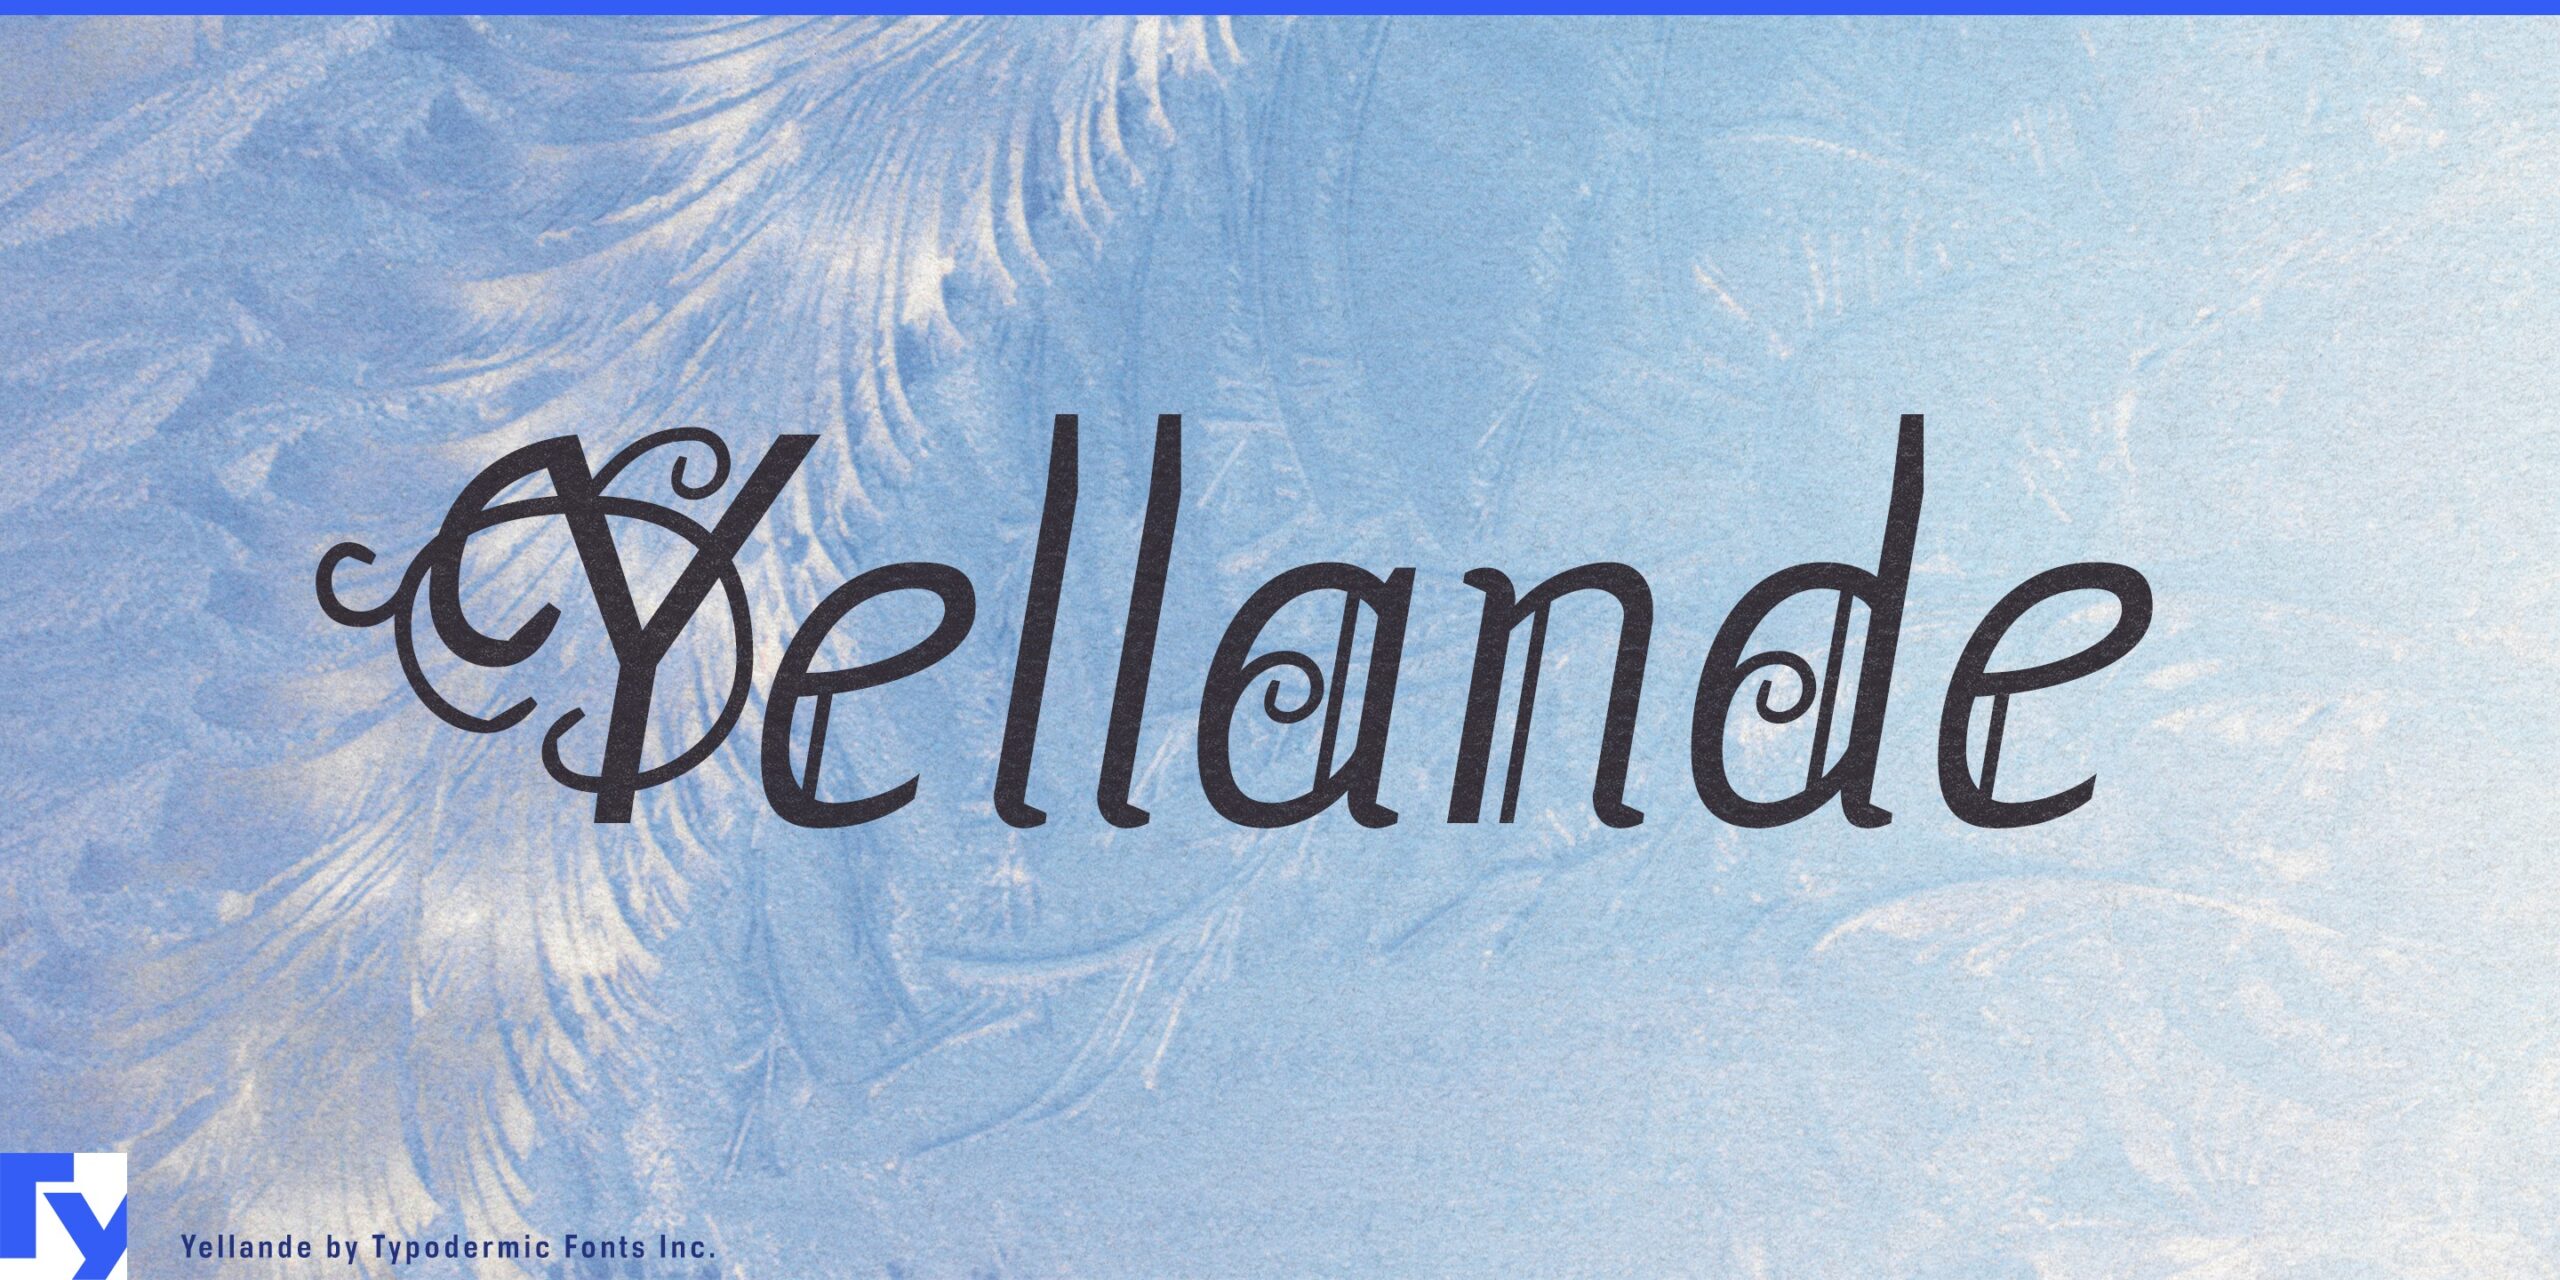 Curled Wrought-Iron Look: Yellande Typeface's Inspiring Creativity